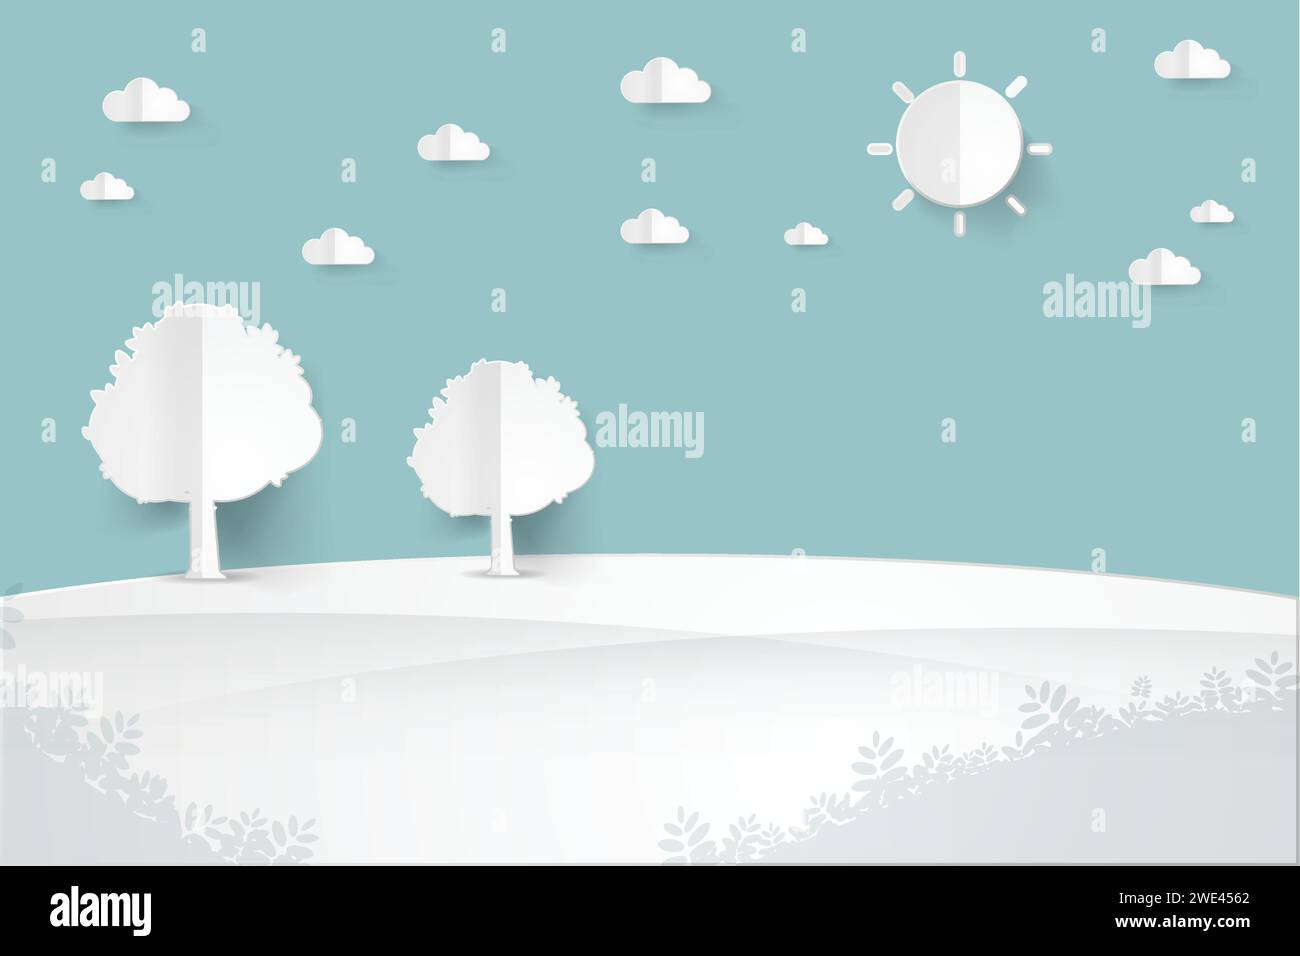 minimalist landscape with tree,hill,sun,cloud landscape background, paper art style vector illustration. Stock Vector